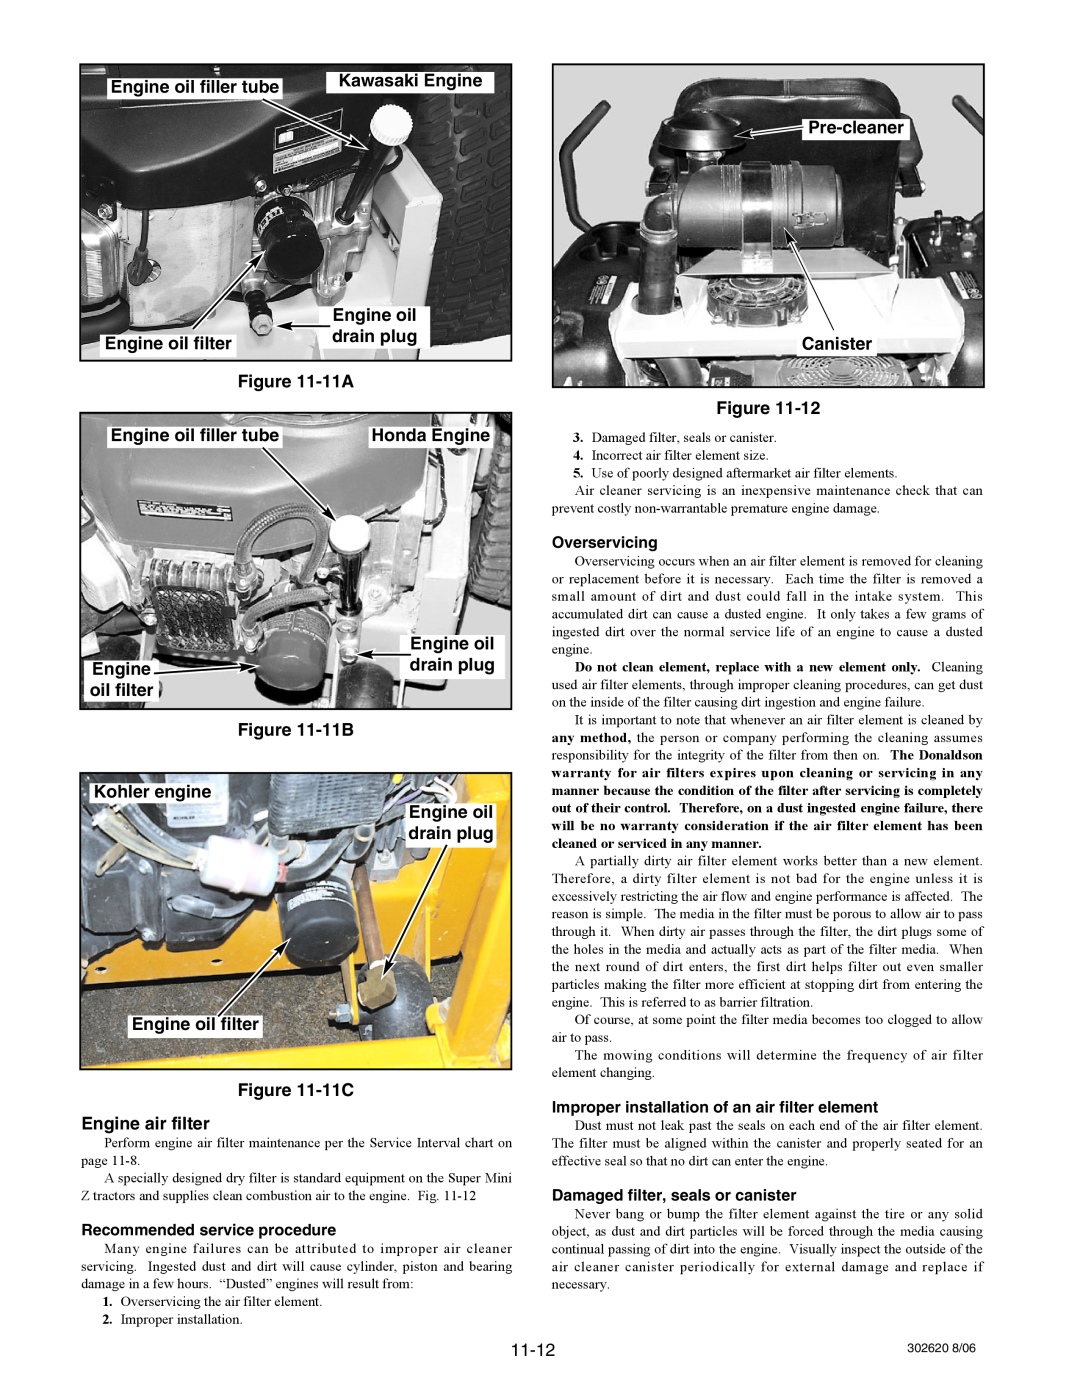 Hustler Turf Super Mini Z manual Kawasaki Engine, Engine oil filler tube, Engine oil filter, drain plug, 11A, Honda Engine 